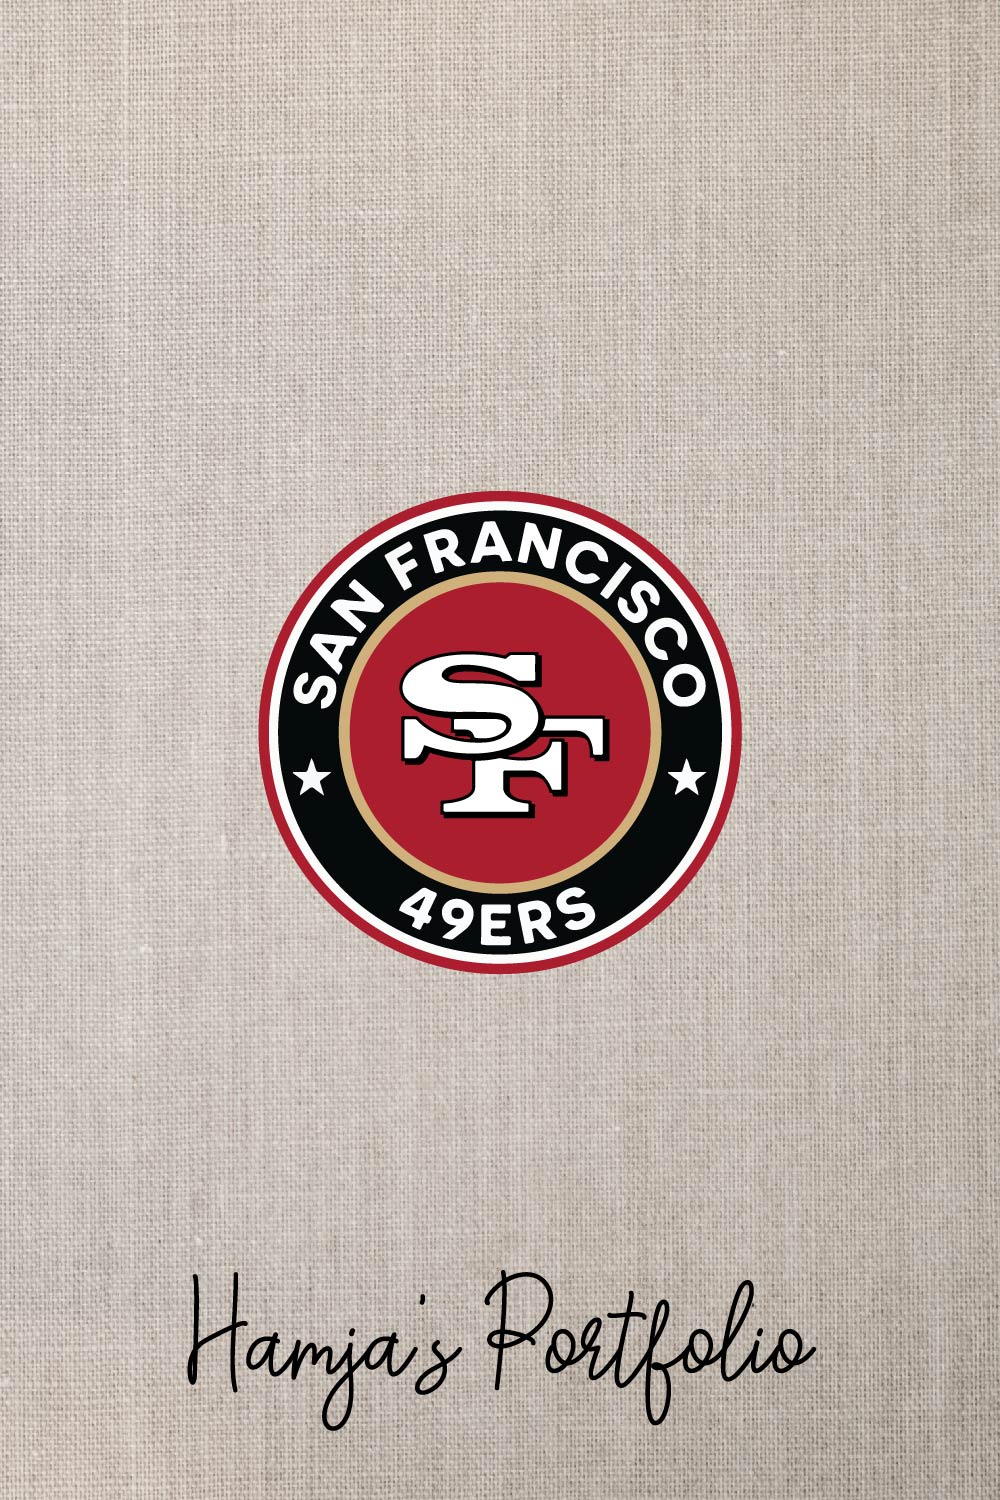 San Francisco 49ERS Logo Vector Set pinterest preview image.